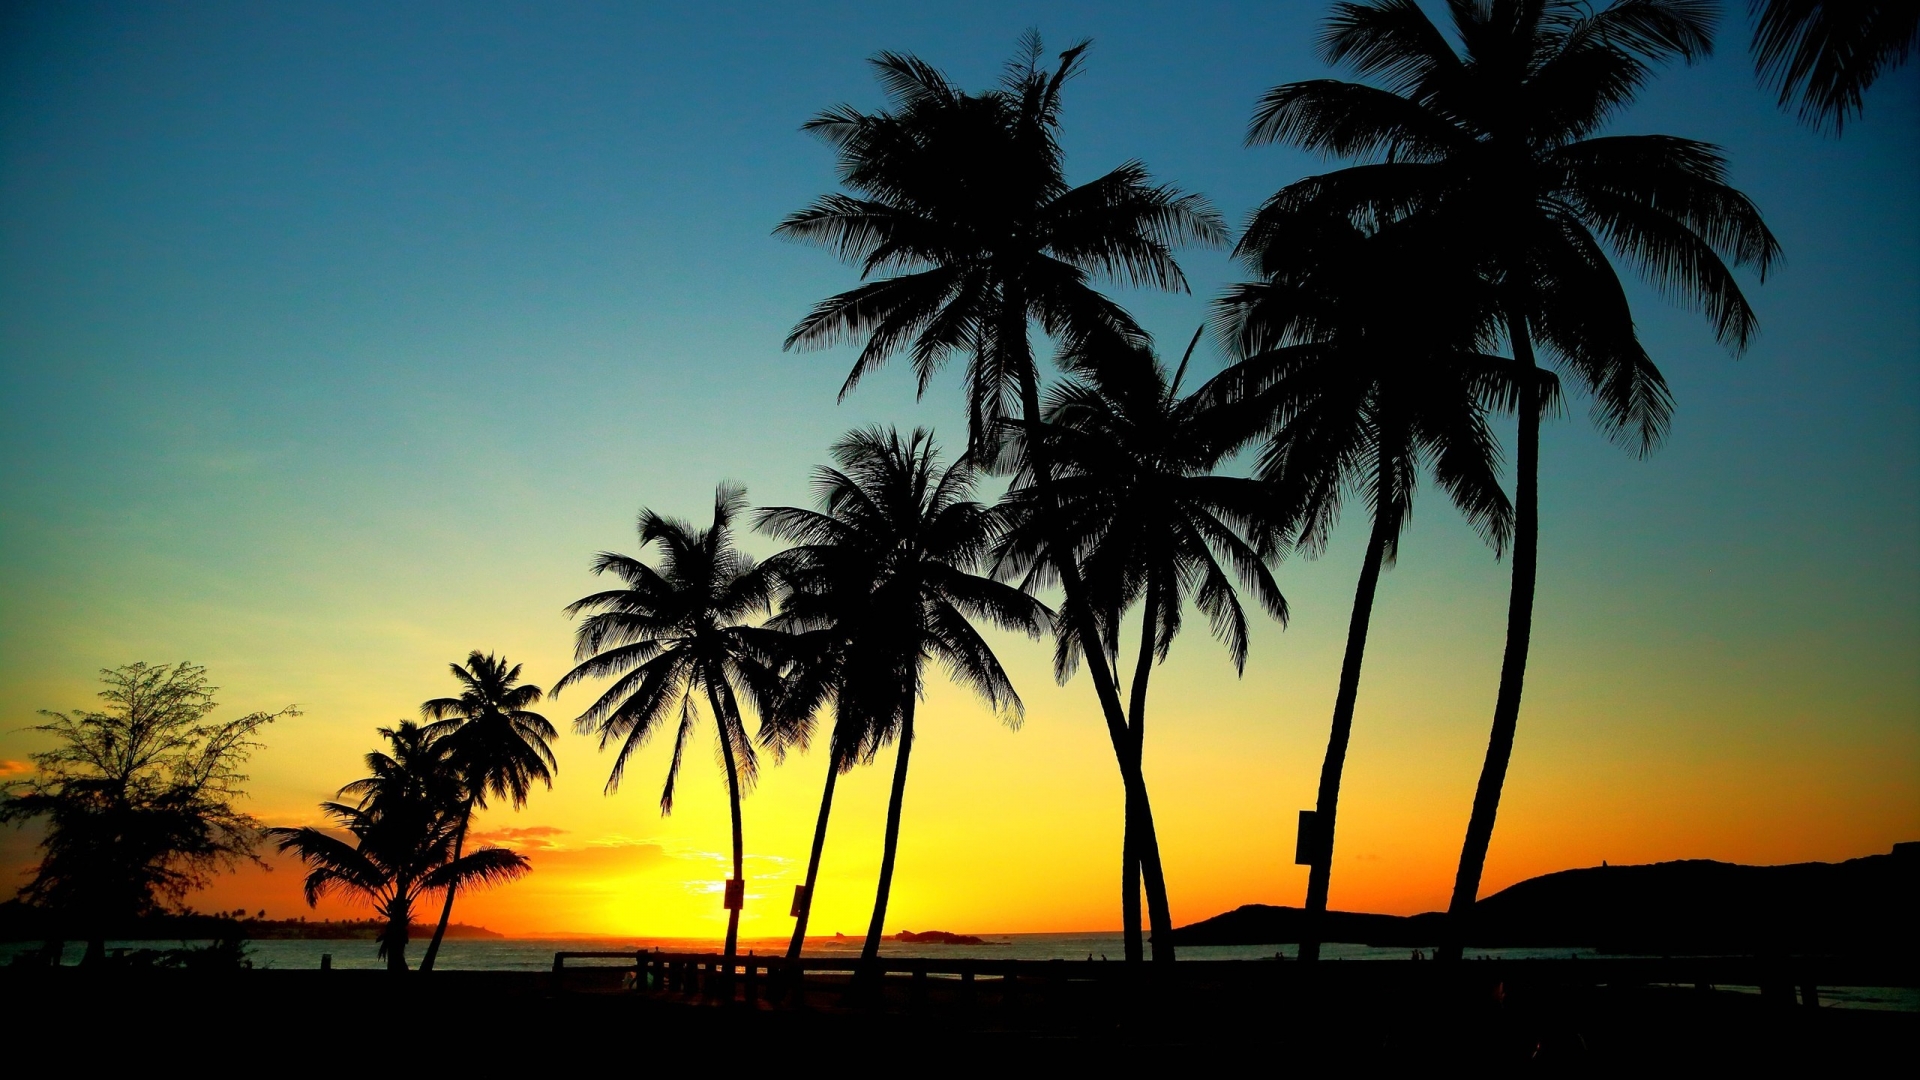 Seaside Palm Trees Sunset Wallpaper Hd For Desktop - Trees In A Sunset - HD Wallpaper 